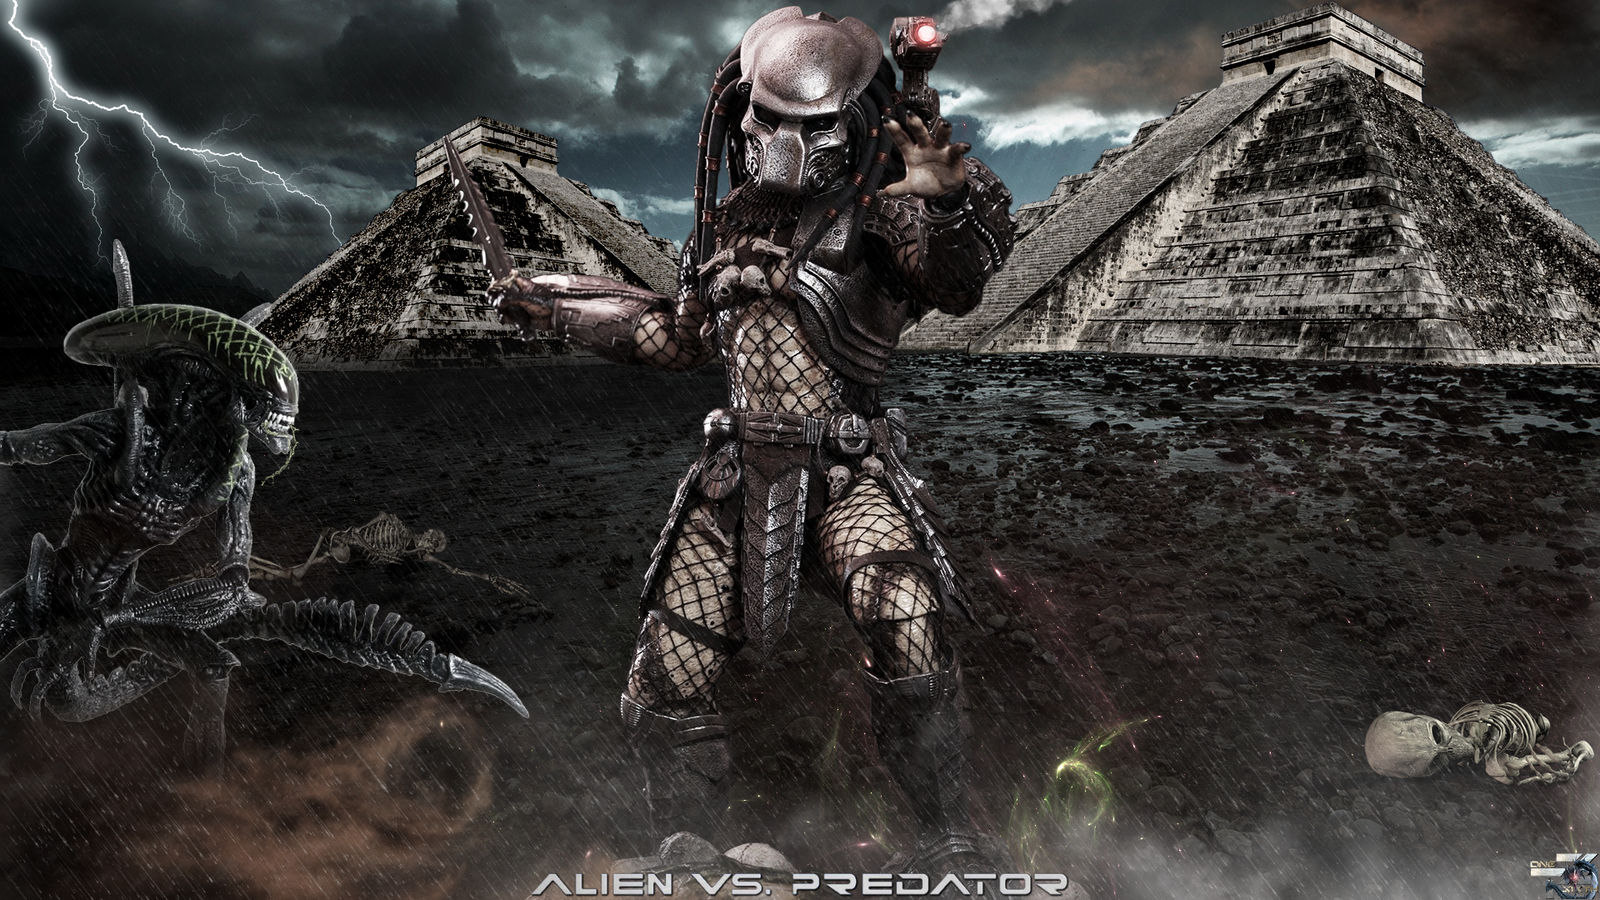 Alien Vs Predator AVP - Hot Toys - HD Wallpaper by Davian-Art on